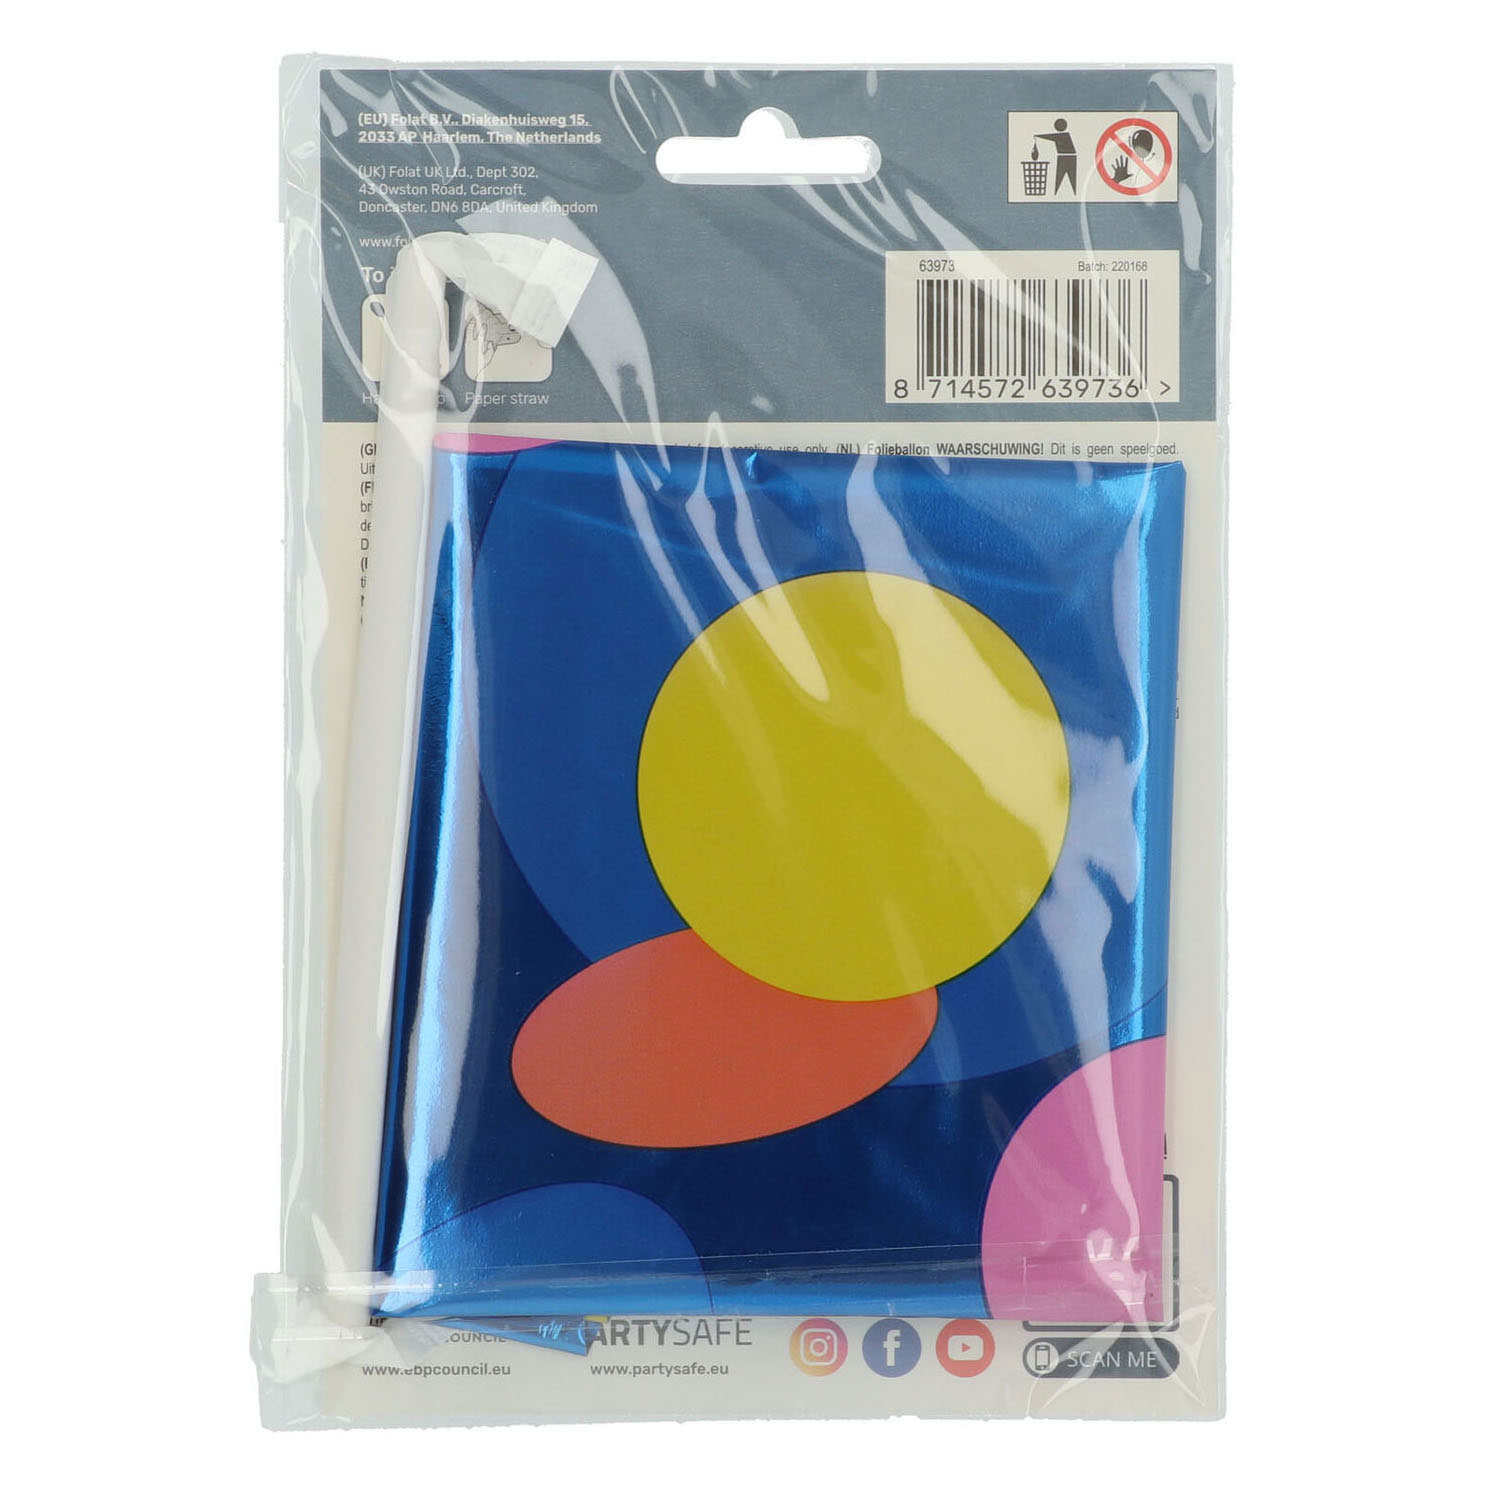 Staande Folieballon Colorful Dots Cijfer 3 - 72cm